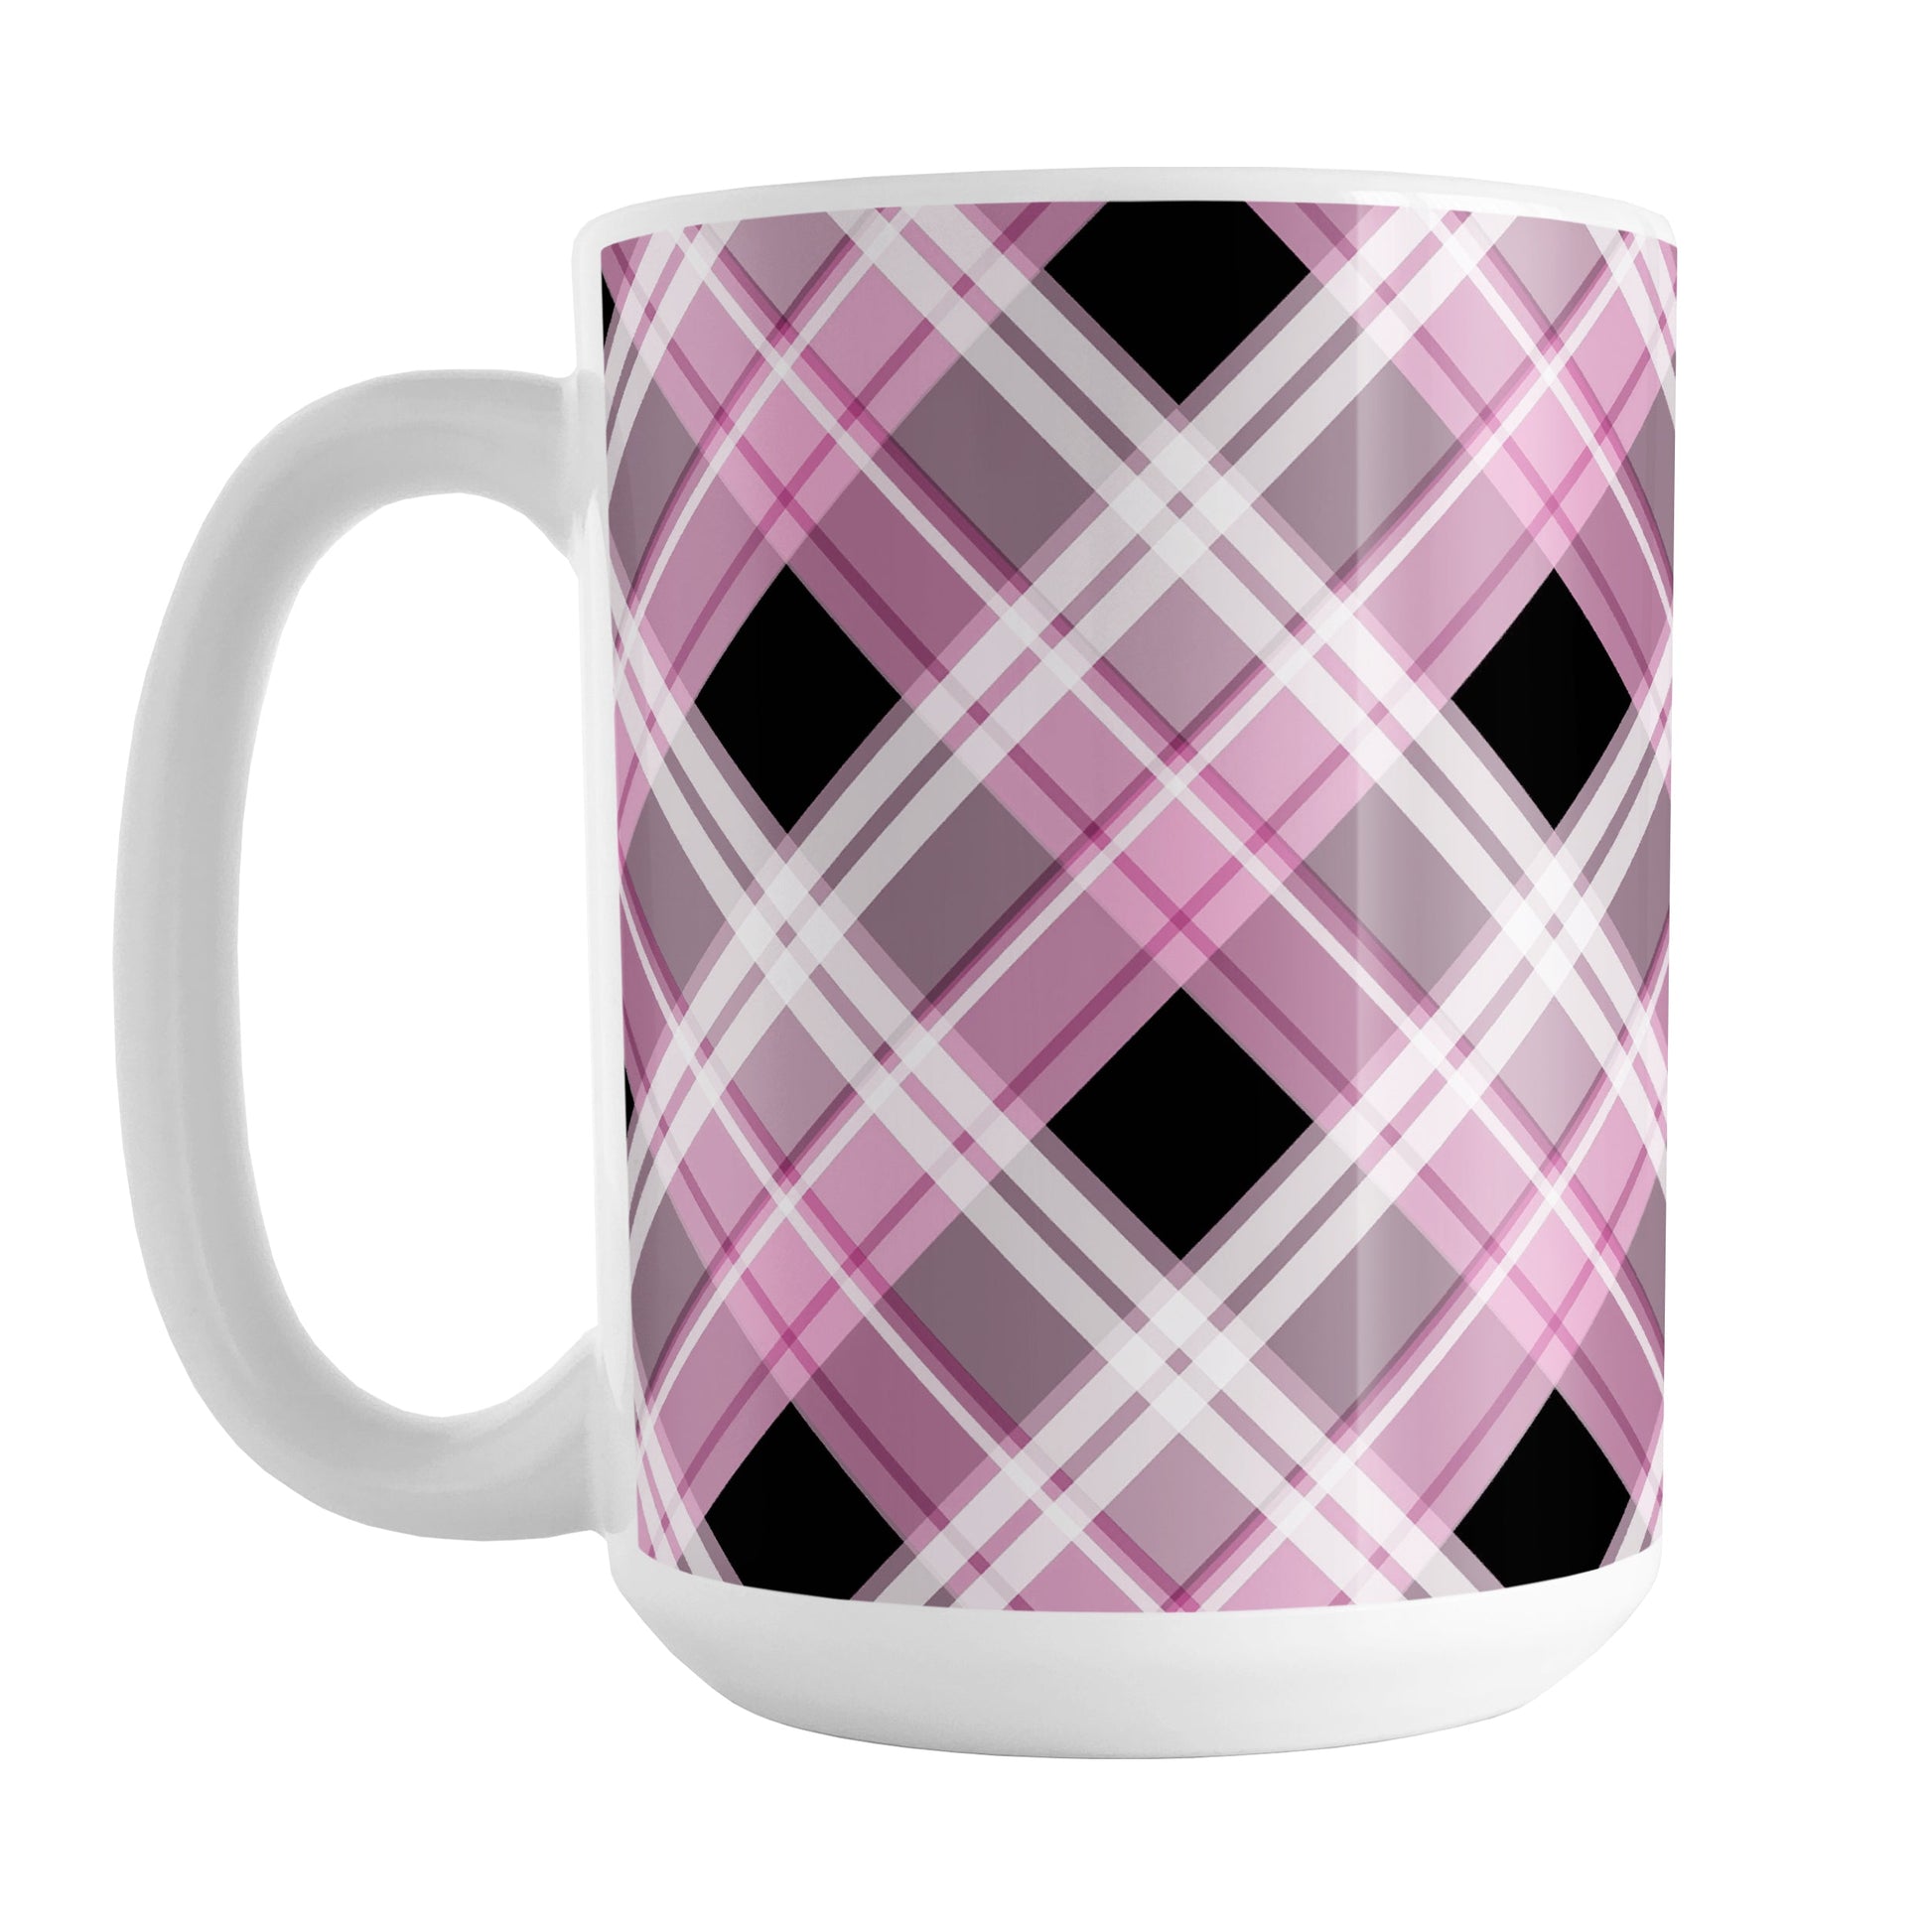 Alternative Pink Plaid Mug (15oz) at Amy's Coffee Mugs. A ceramic coffee mug designed with a diagonal pink, black, and white plaid pattern that wraps around the mug to the handle. Designed for someone who loves plaid patterns and the colors pink and black together.